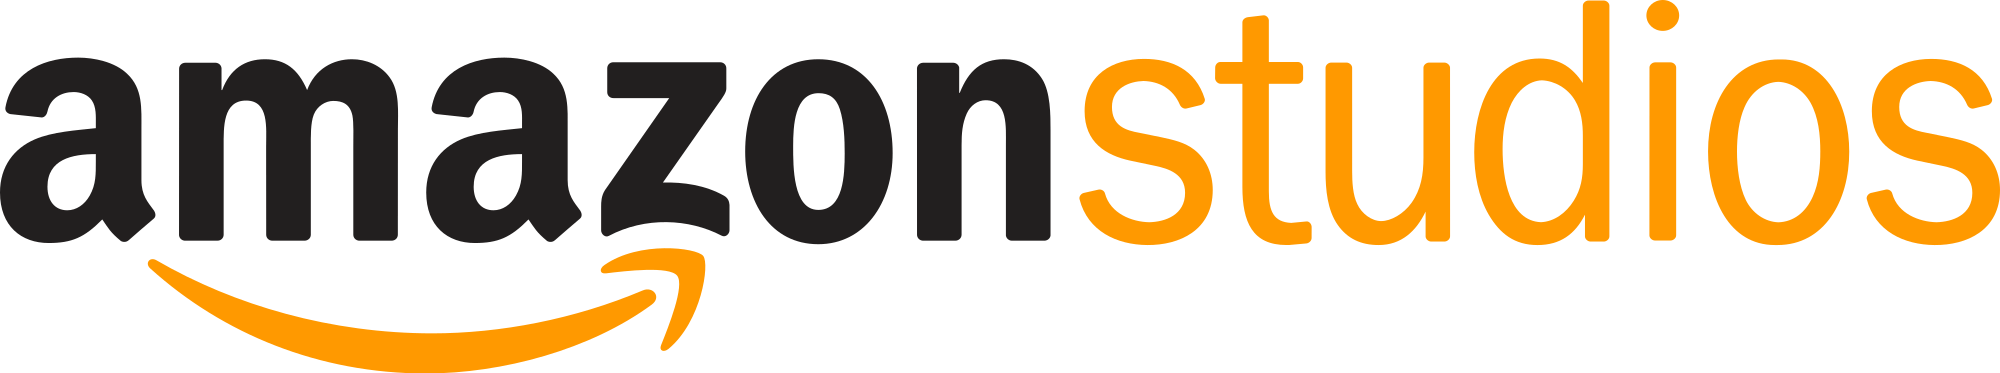 Amazon Studios Logo - Amazon Studios logo.svg